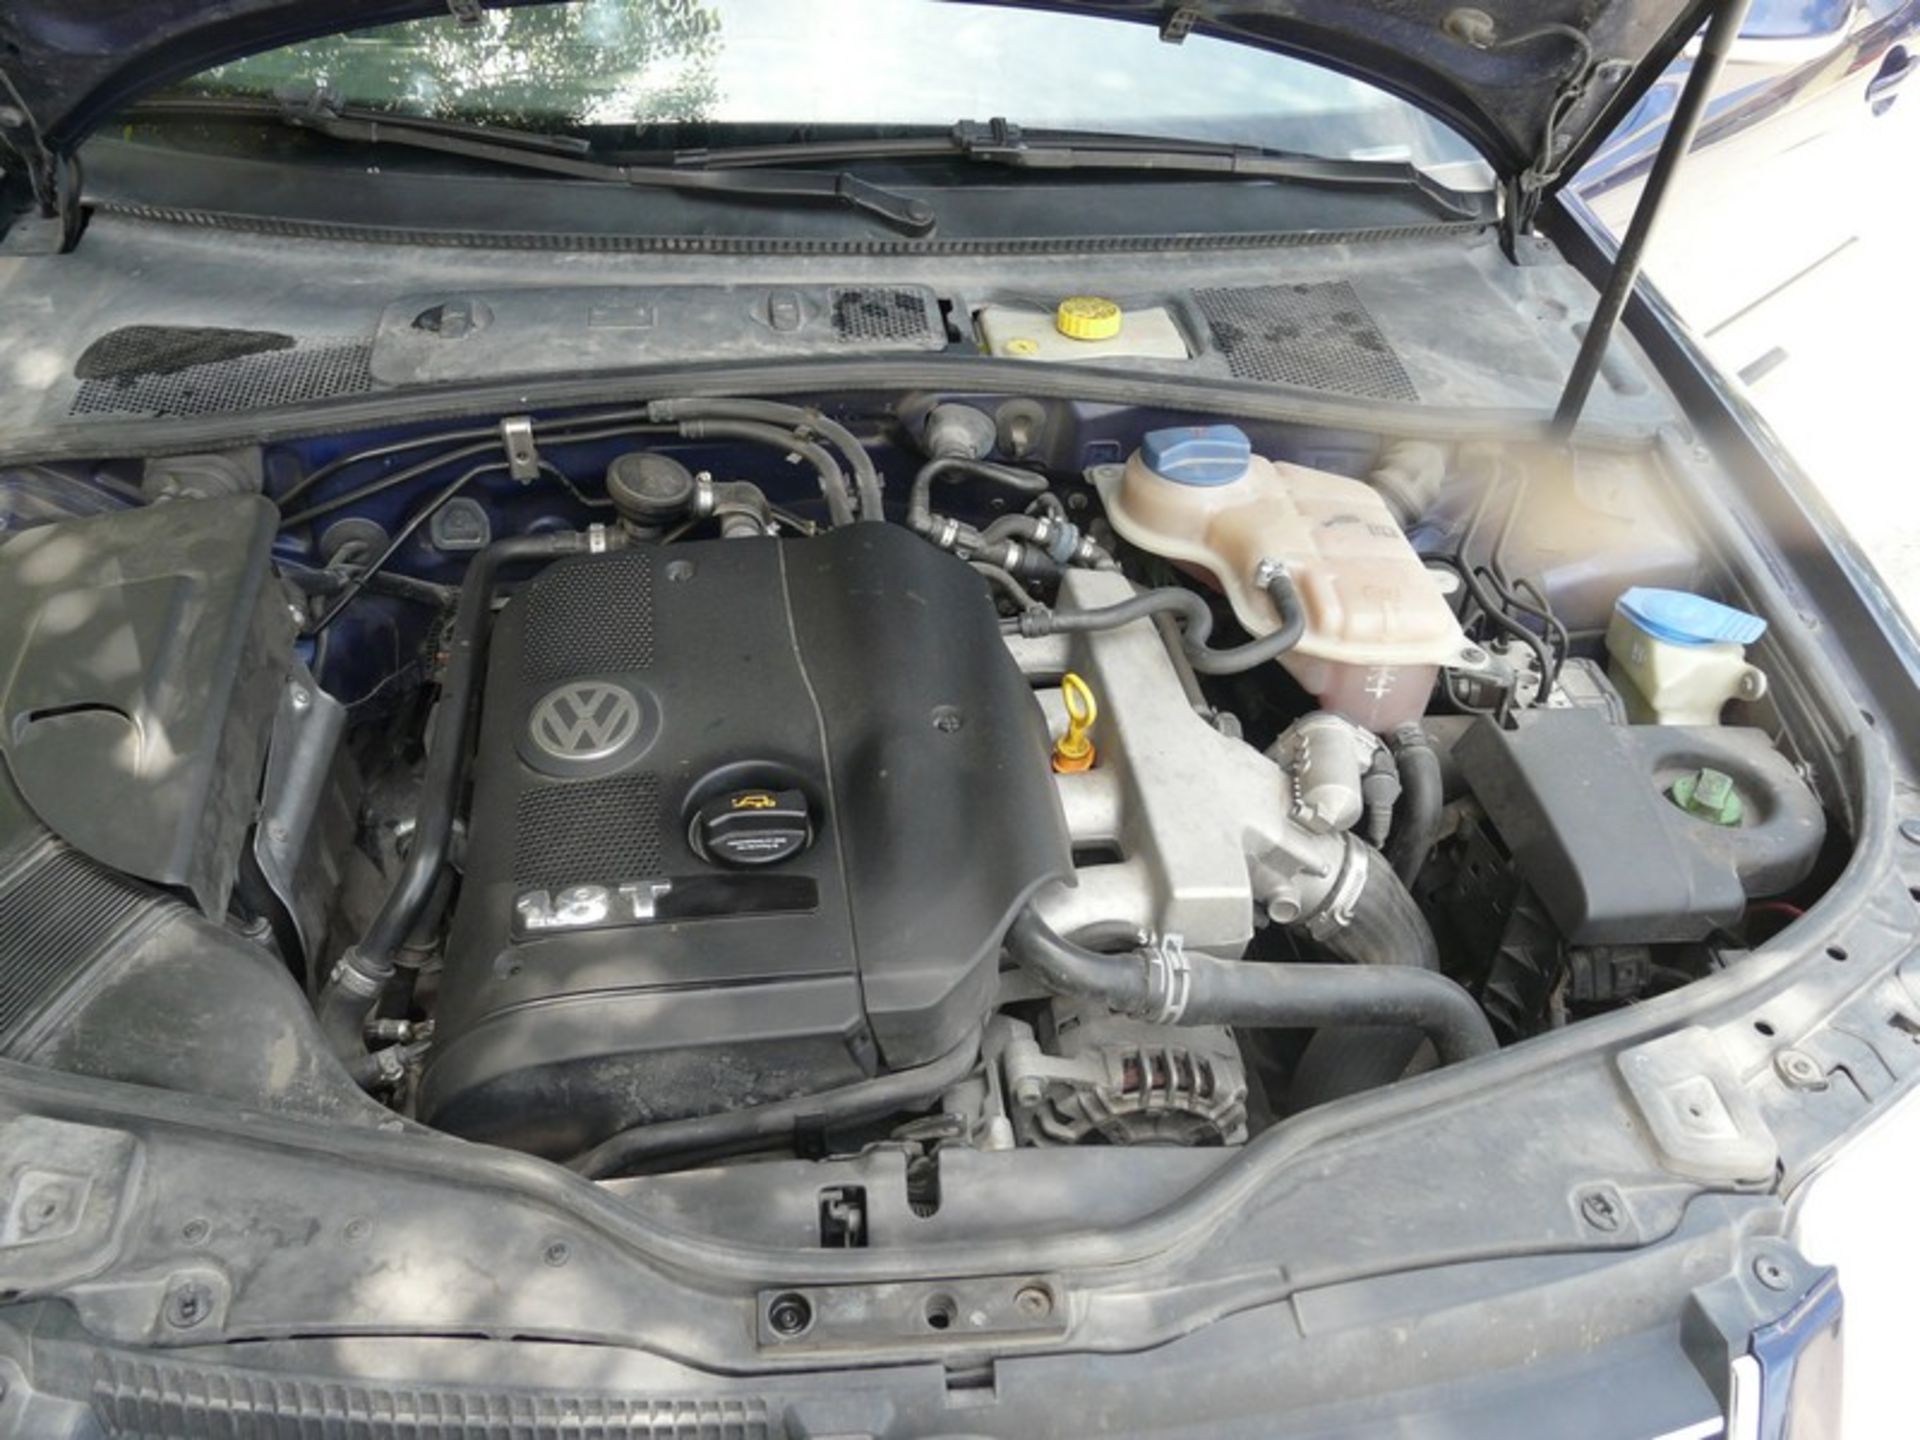 VW PASSAT 1.8 T PETROL, REG ZΚΥ 8440 KM 336683, WORKING CONDITION (Located in Greece - Platy) - Bild 10 aus 10